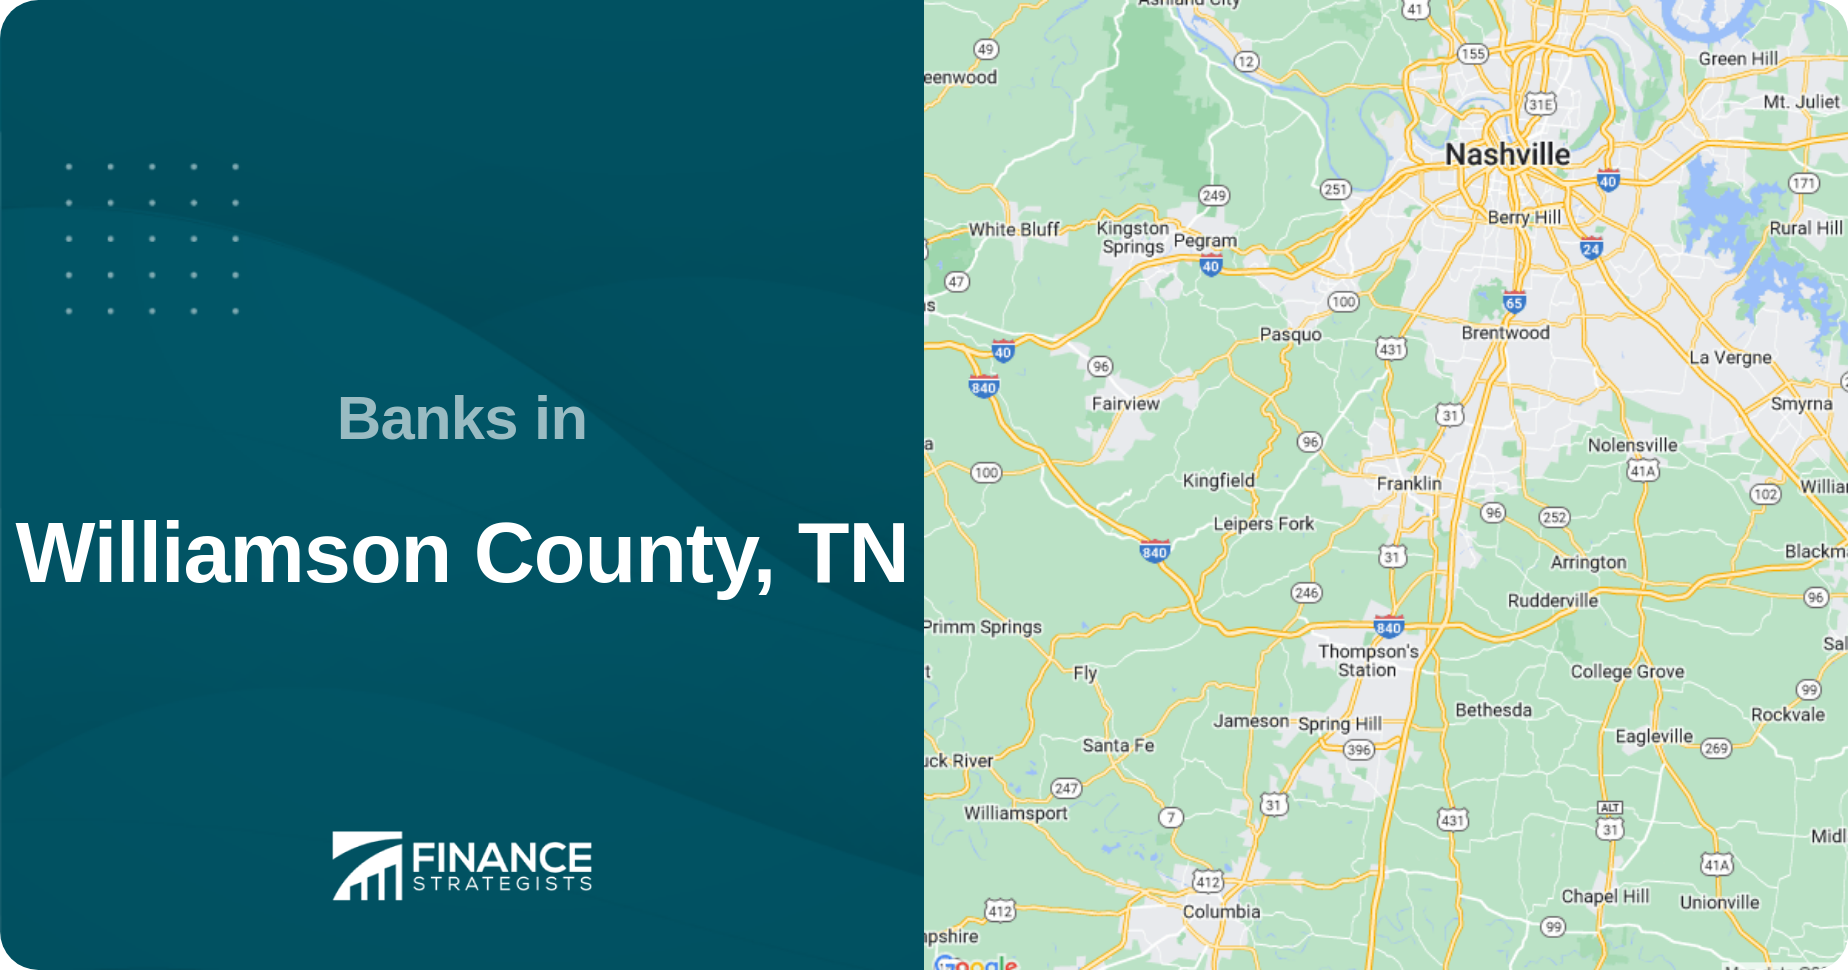 Banks in Williamson County, TN